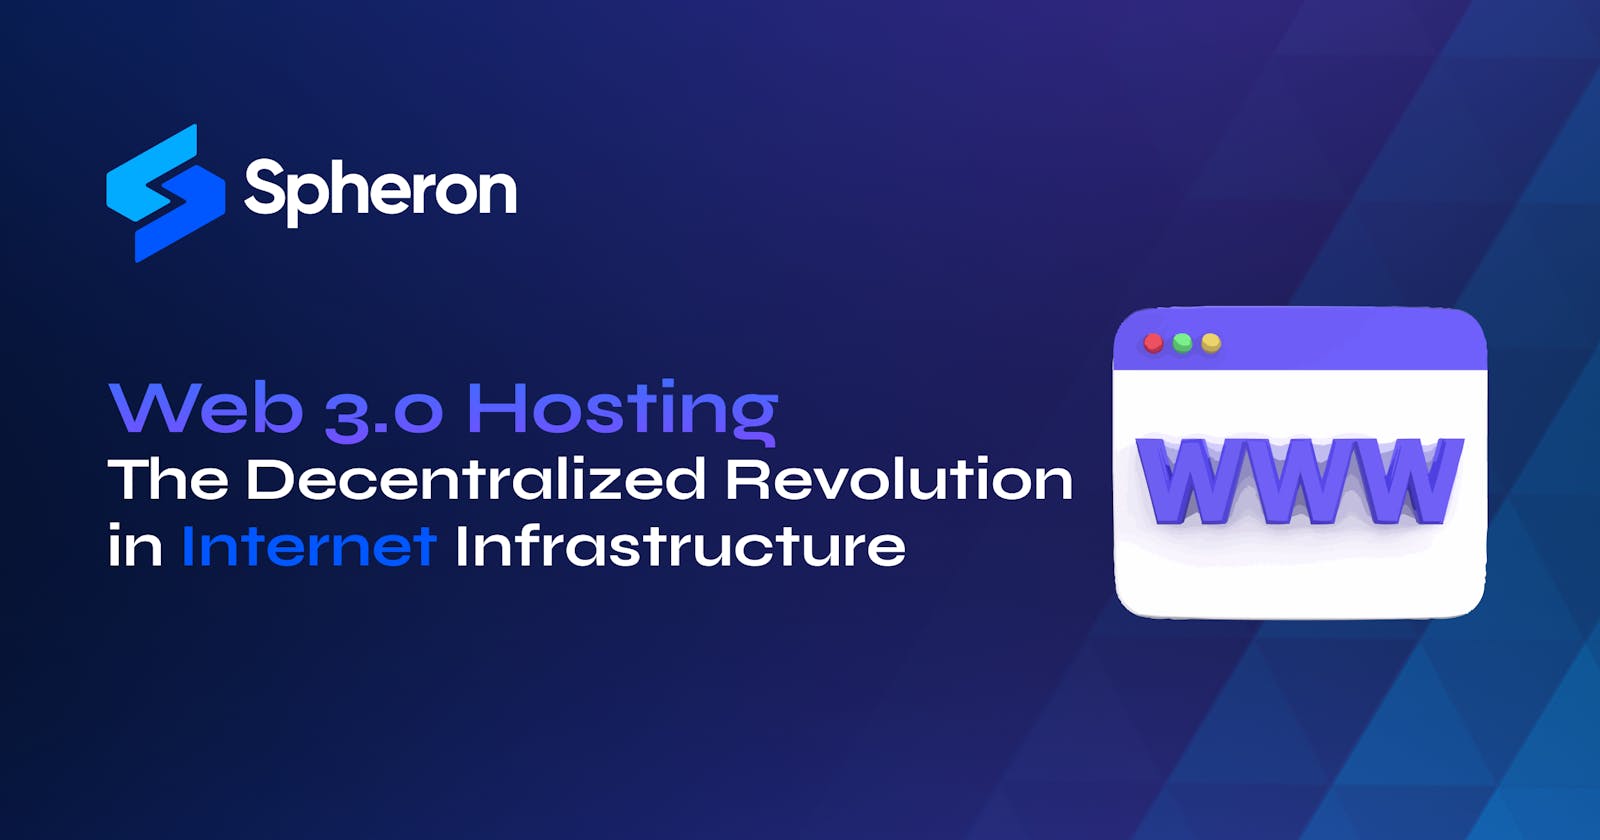 Web 3.0 Hosting: The Decentralized Revolution in Internet Infrastructure